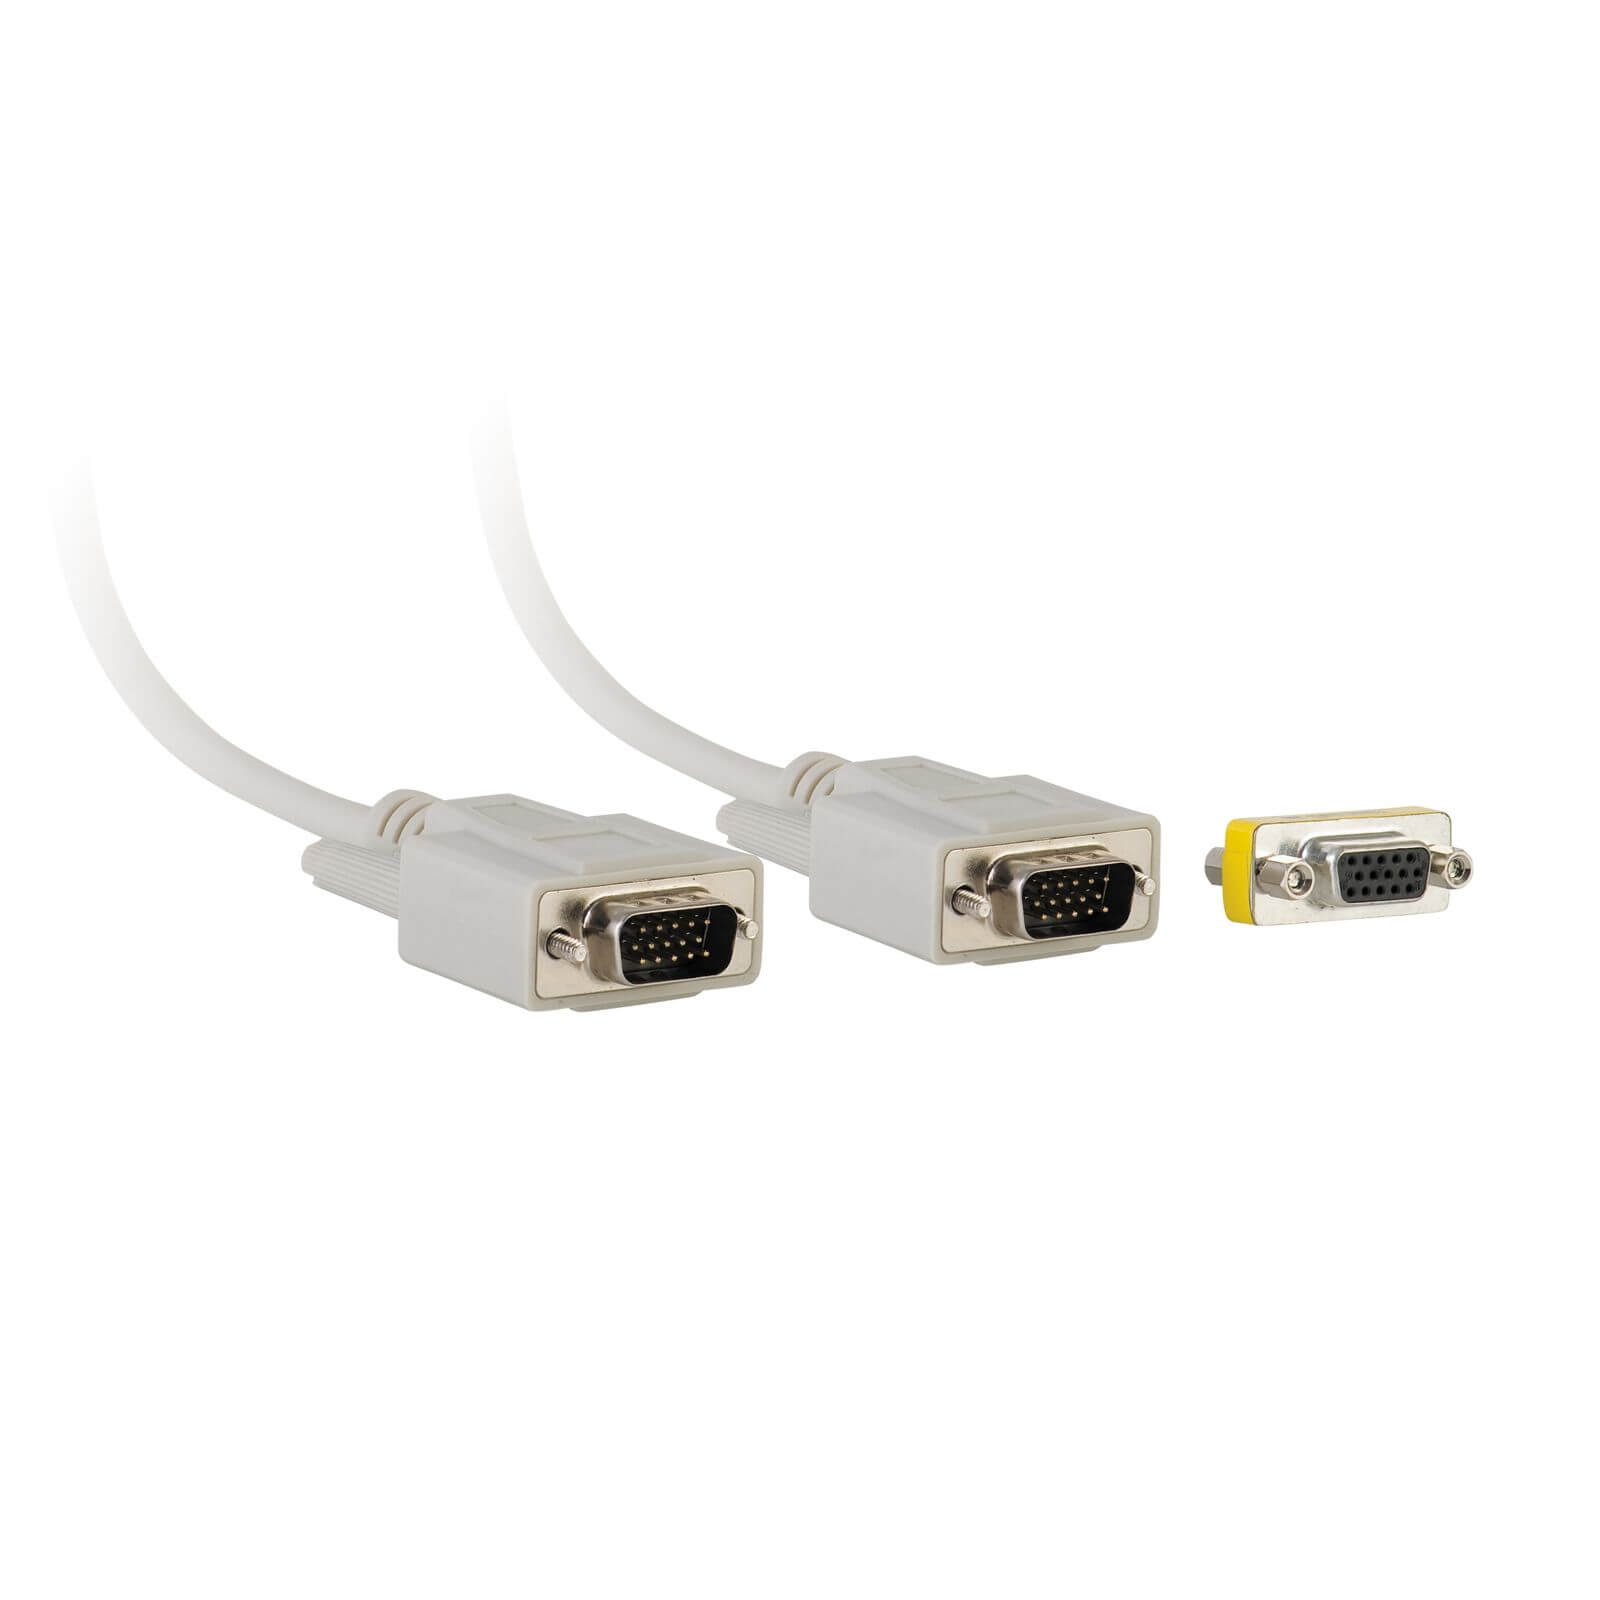 Antsig VGA Cable and Adaptor 5m